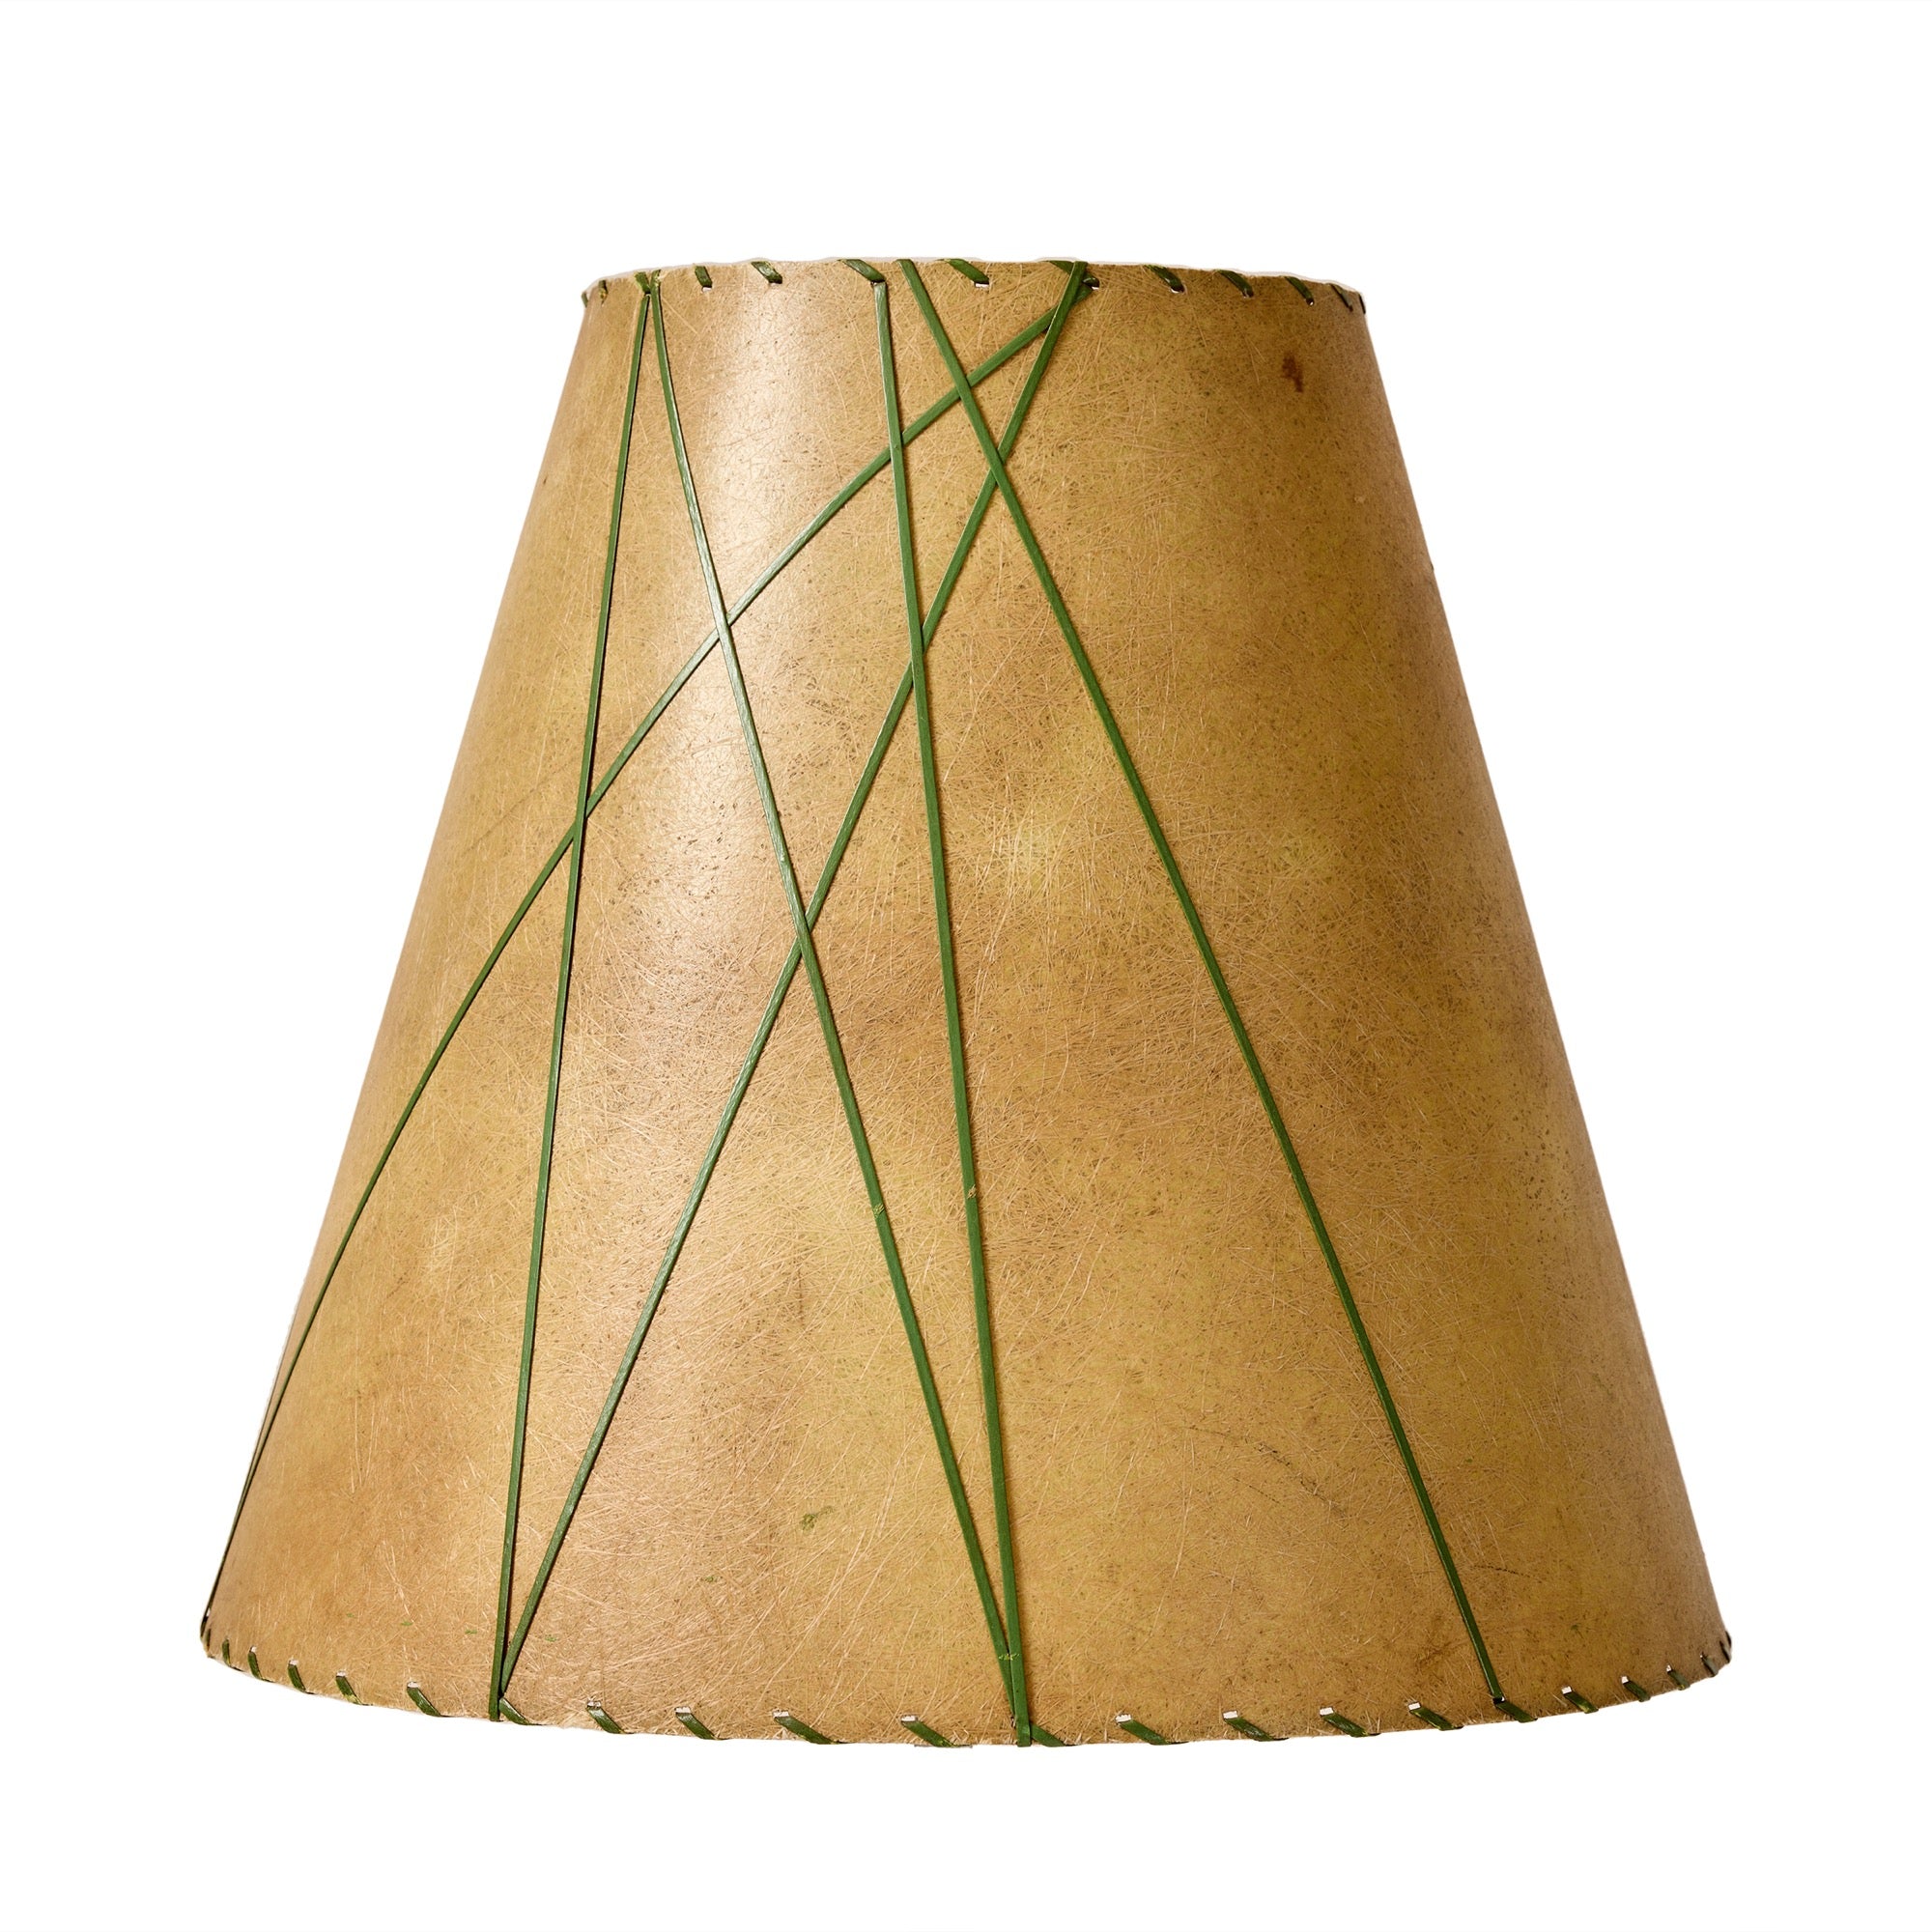 Vintage Fiberglass Lamp Shade from USA